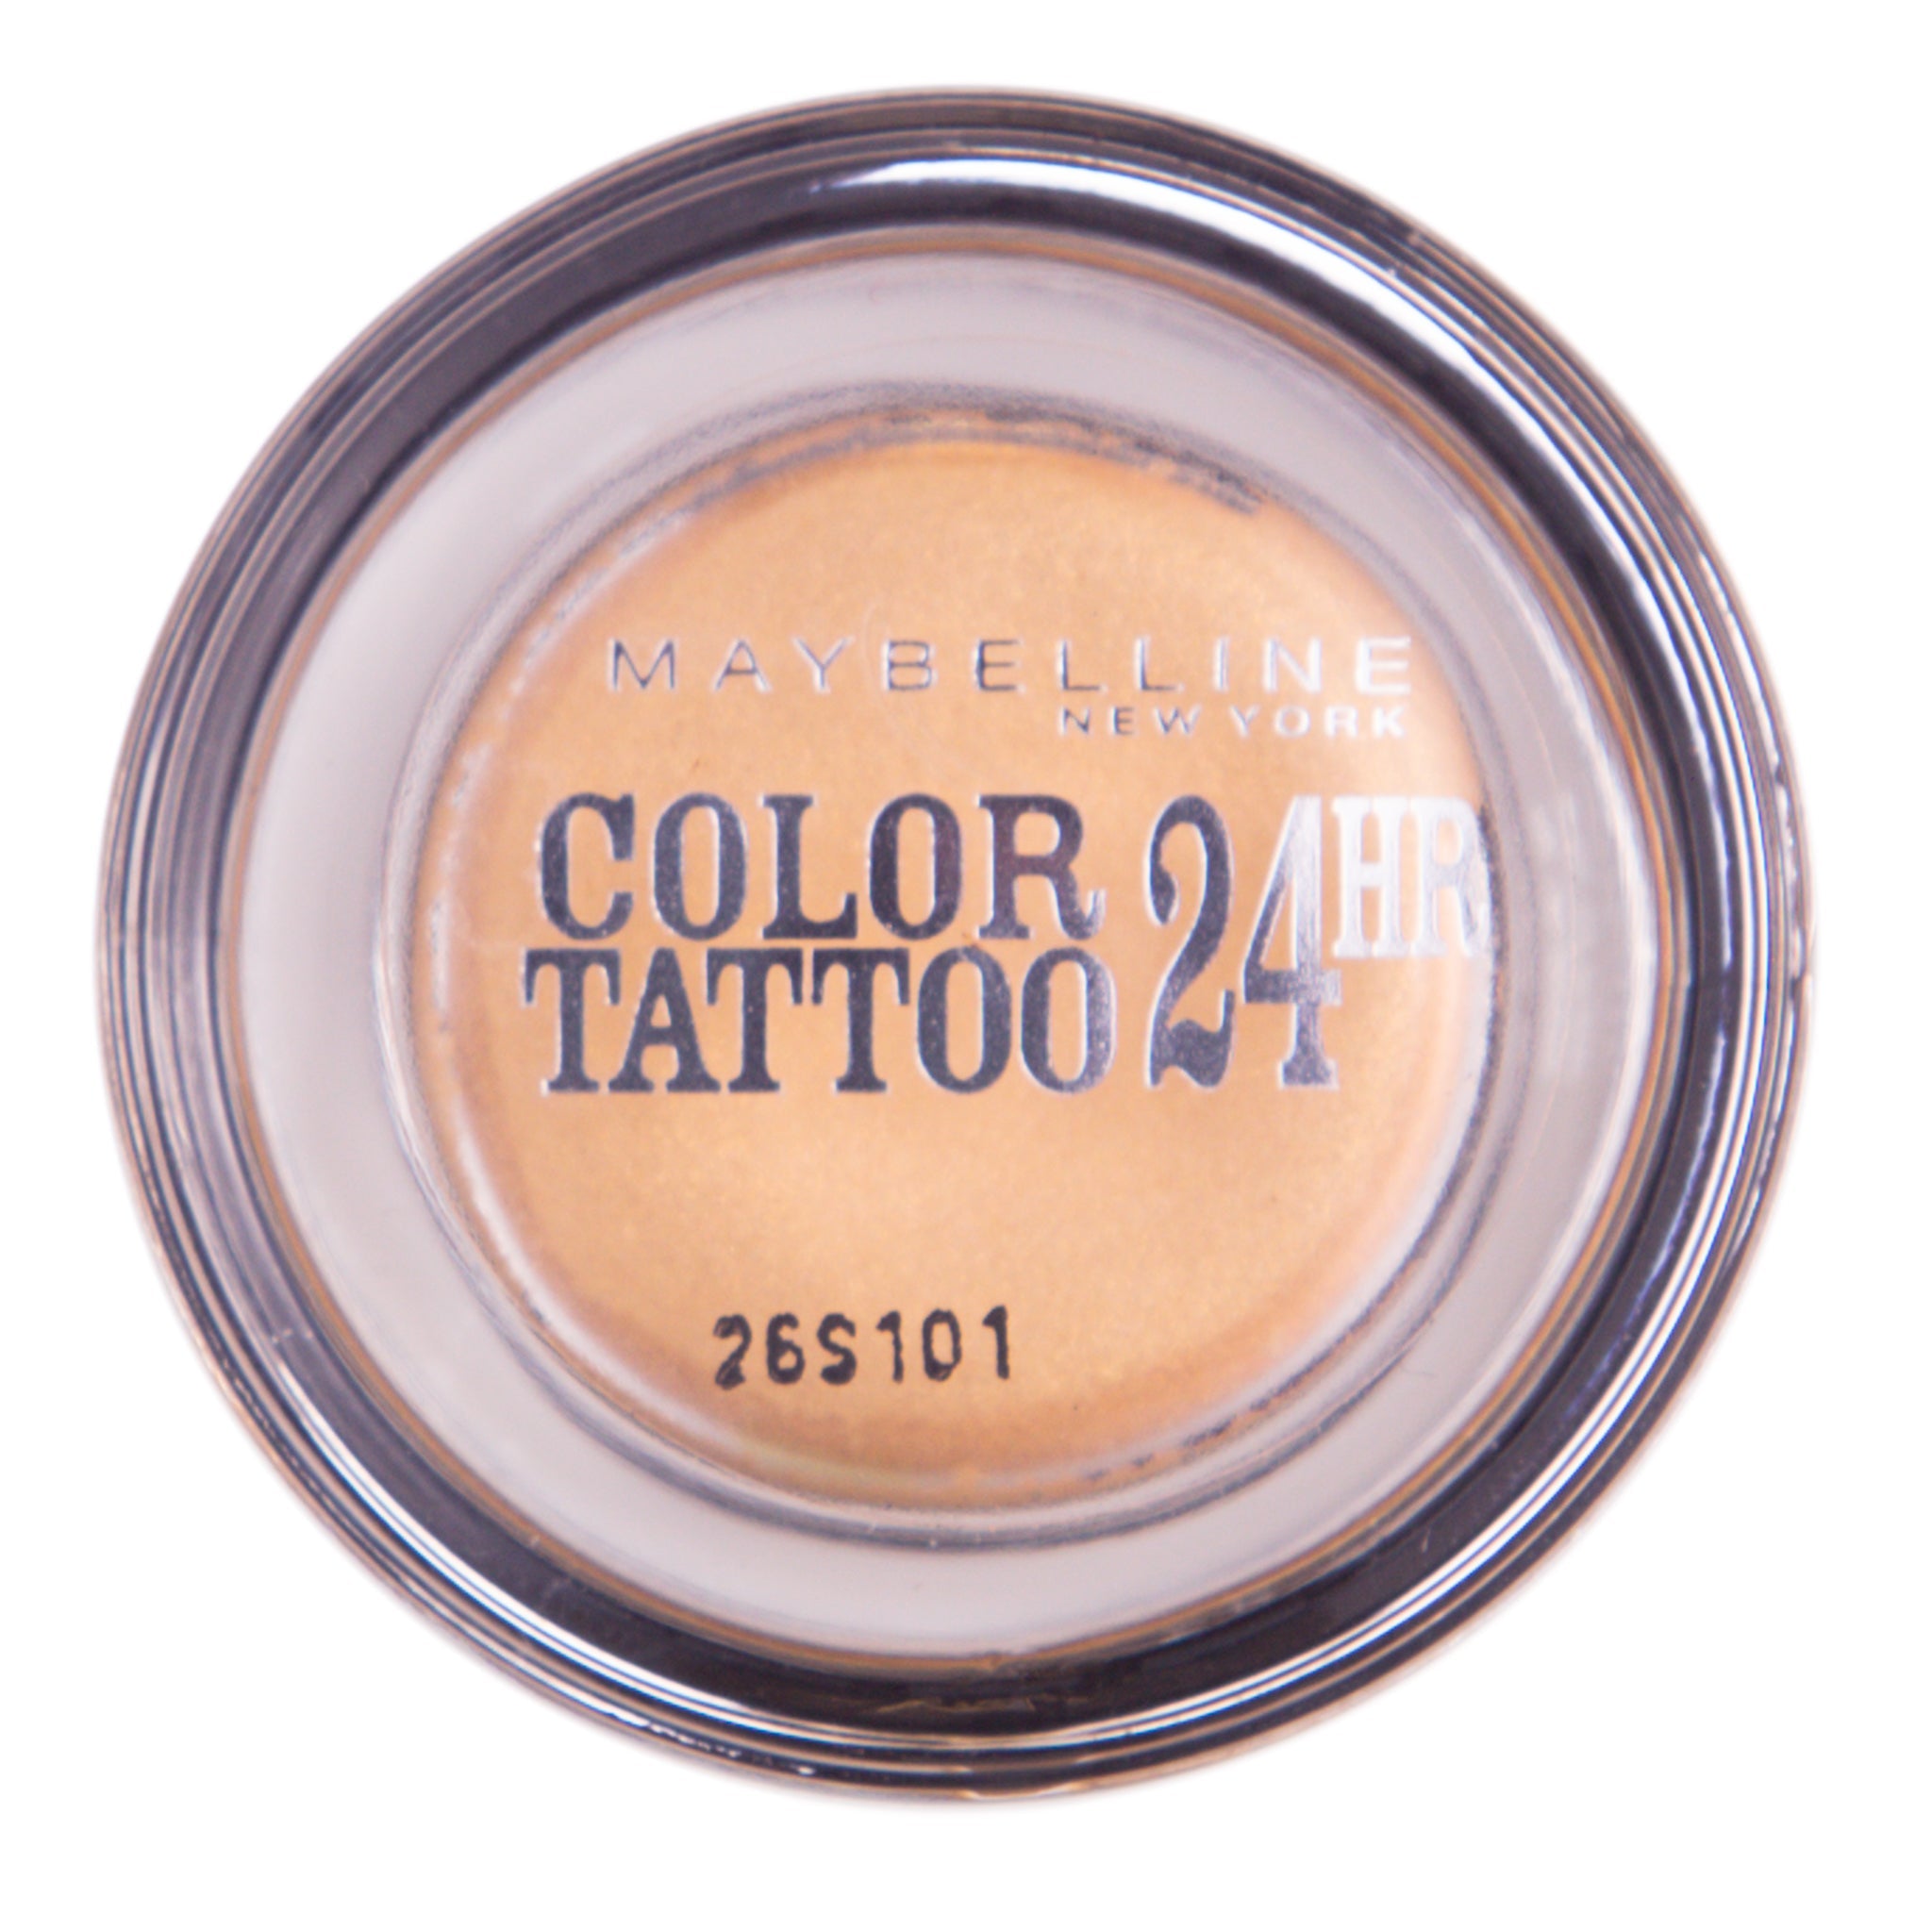 [B-GRADE] Maybelline Colour Tattoo 24 Hour Eye Shadow - 05 Eternal Gold